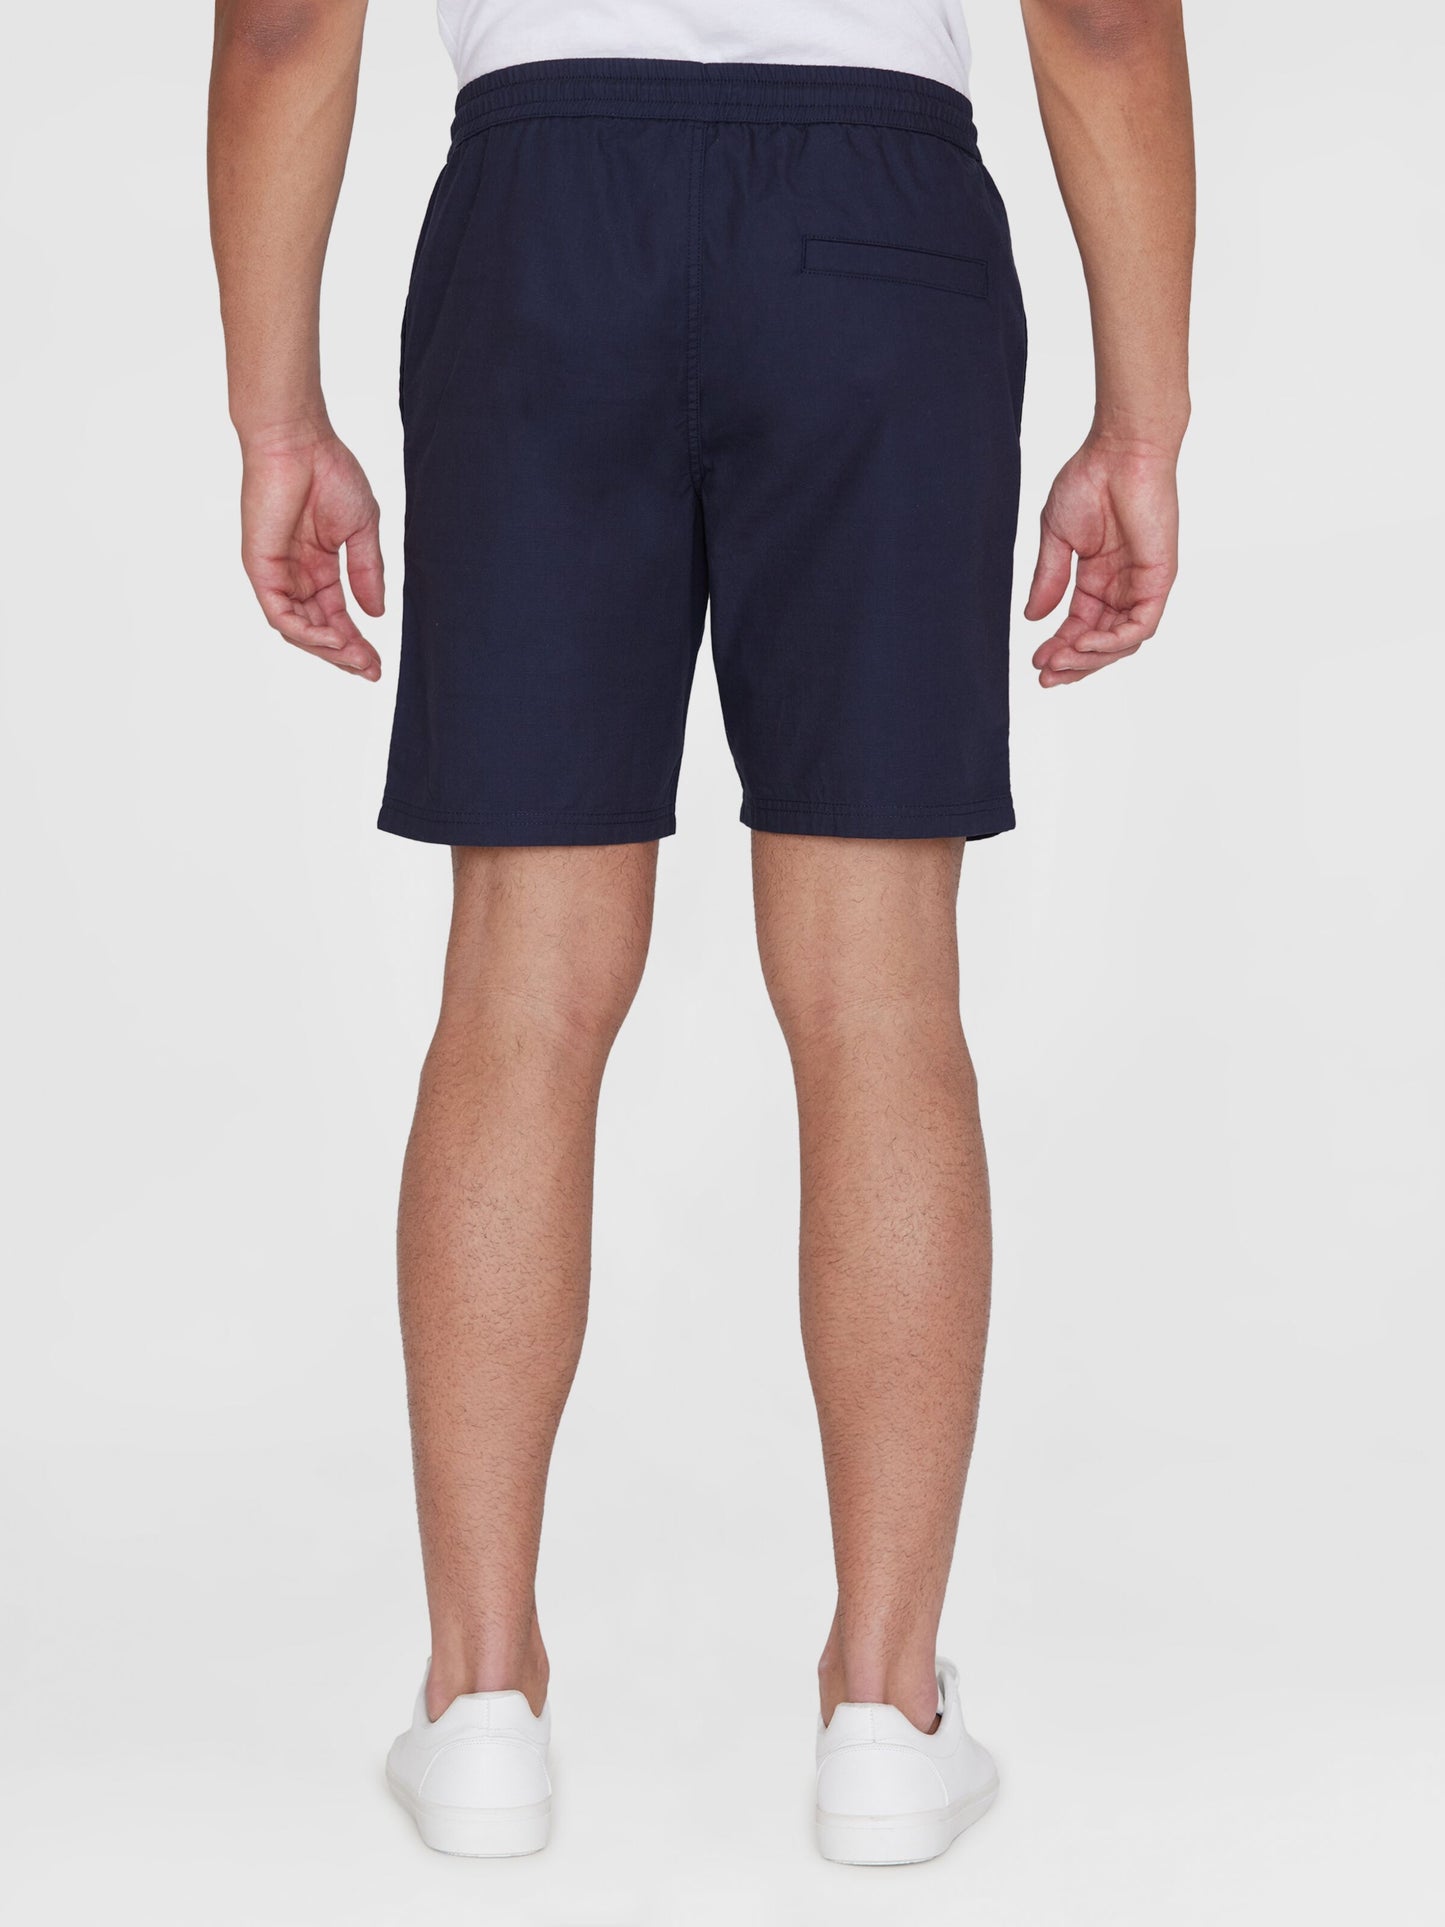 KCA - Boardwalk shorts with elastic waist Night Sky